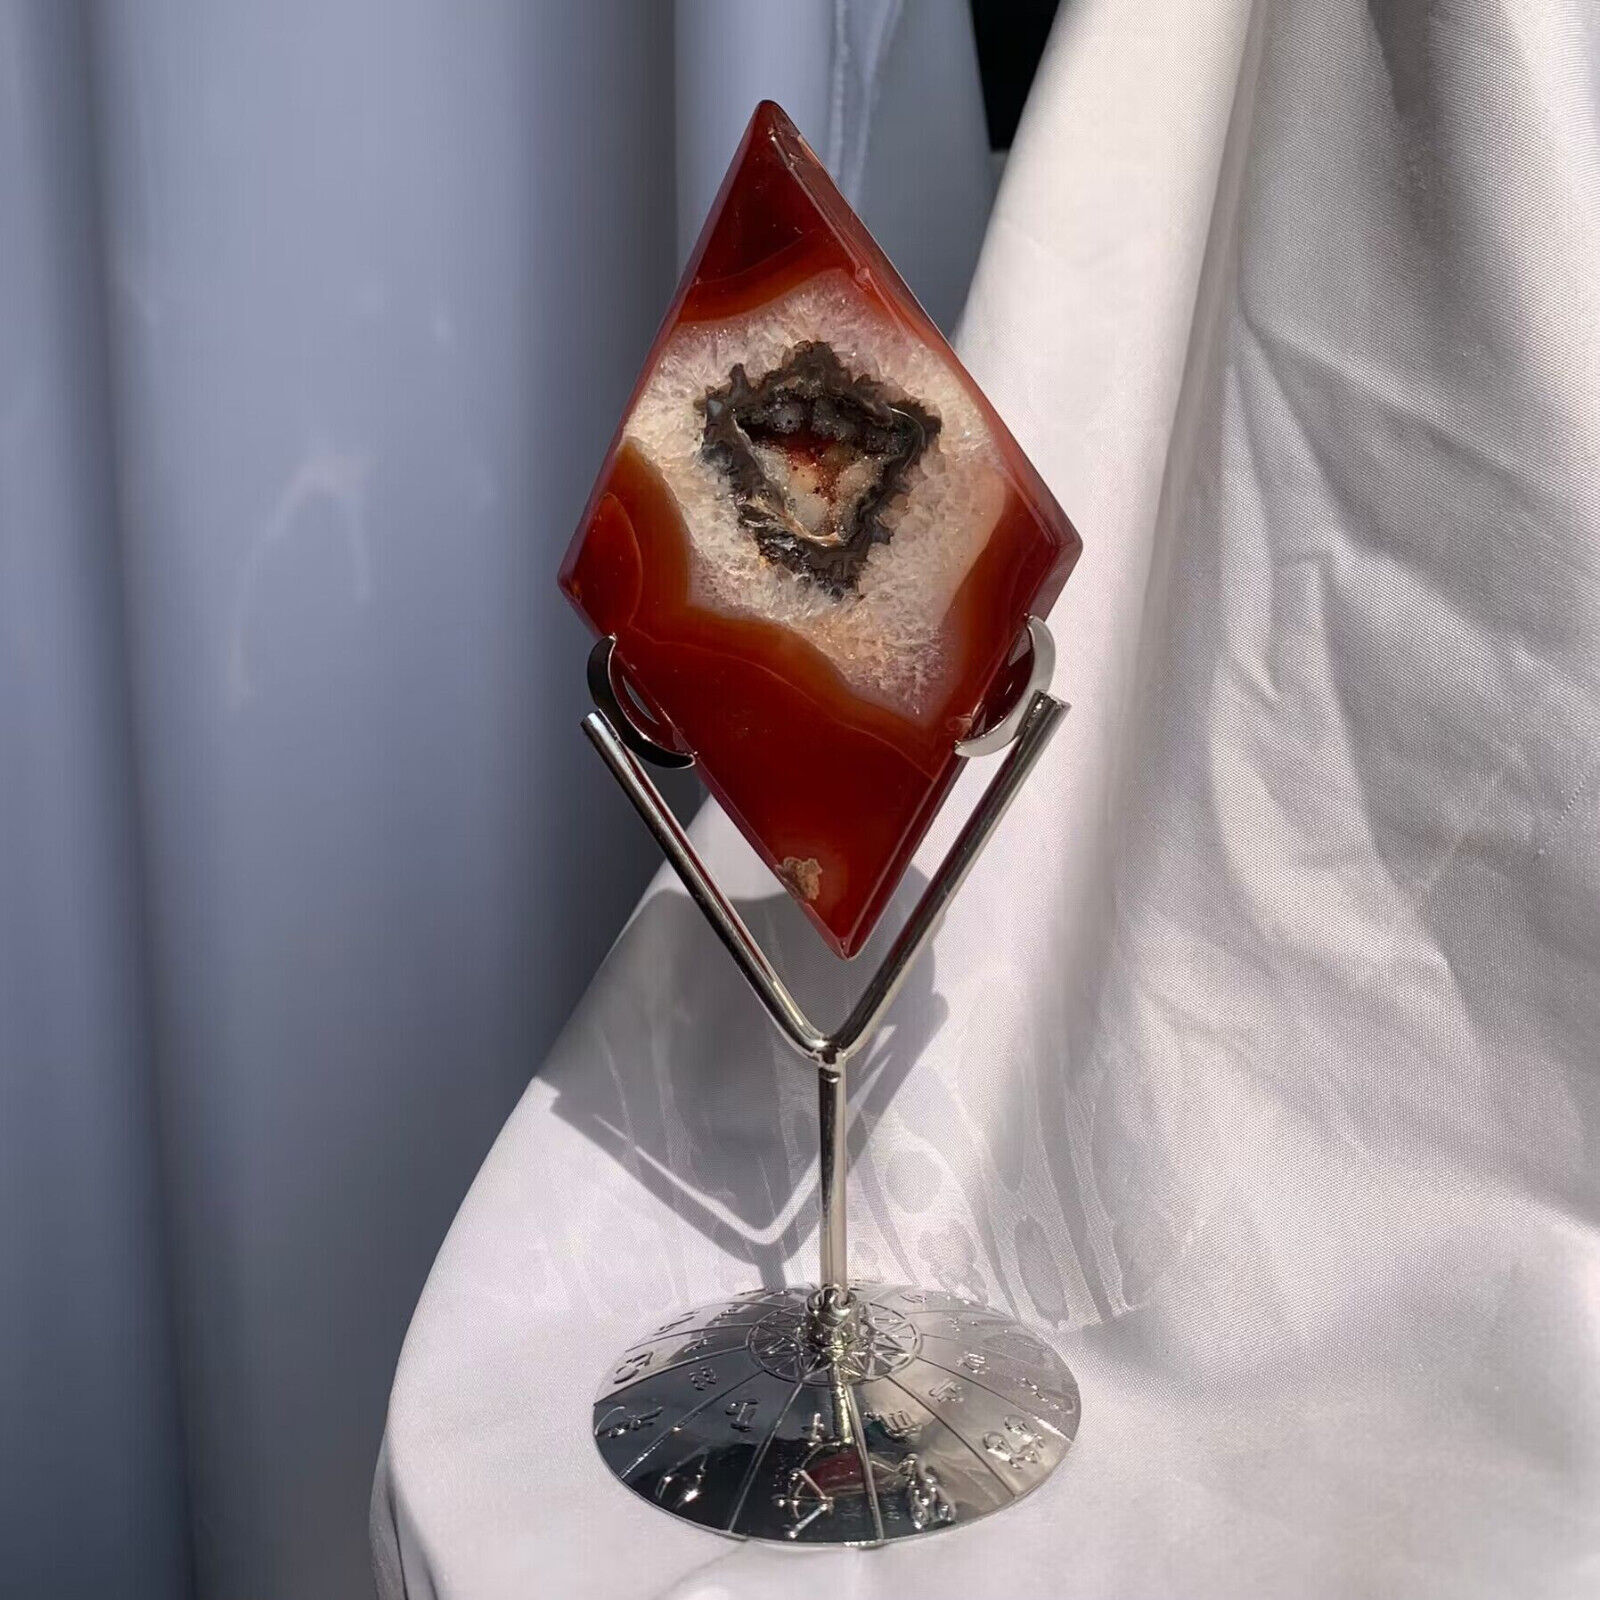 107g Druzy Red Agate Carnelian Diamond Carving Quartz Crystal Decoration+Stand